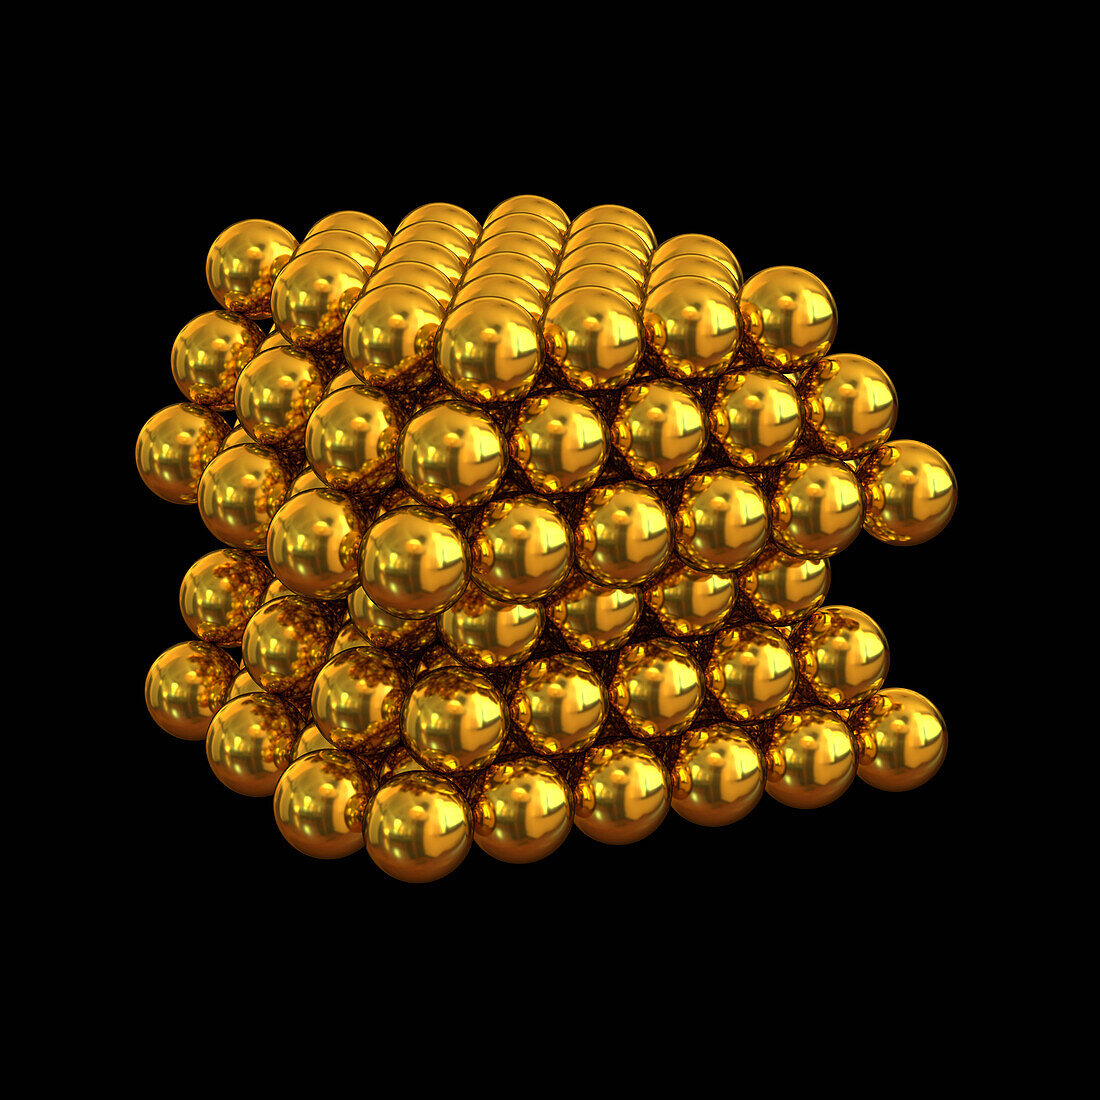 Gold crystal structure, illustration